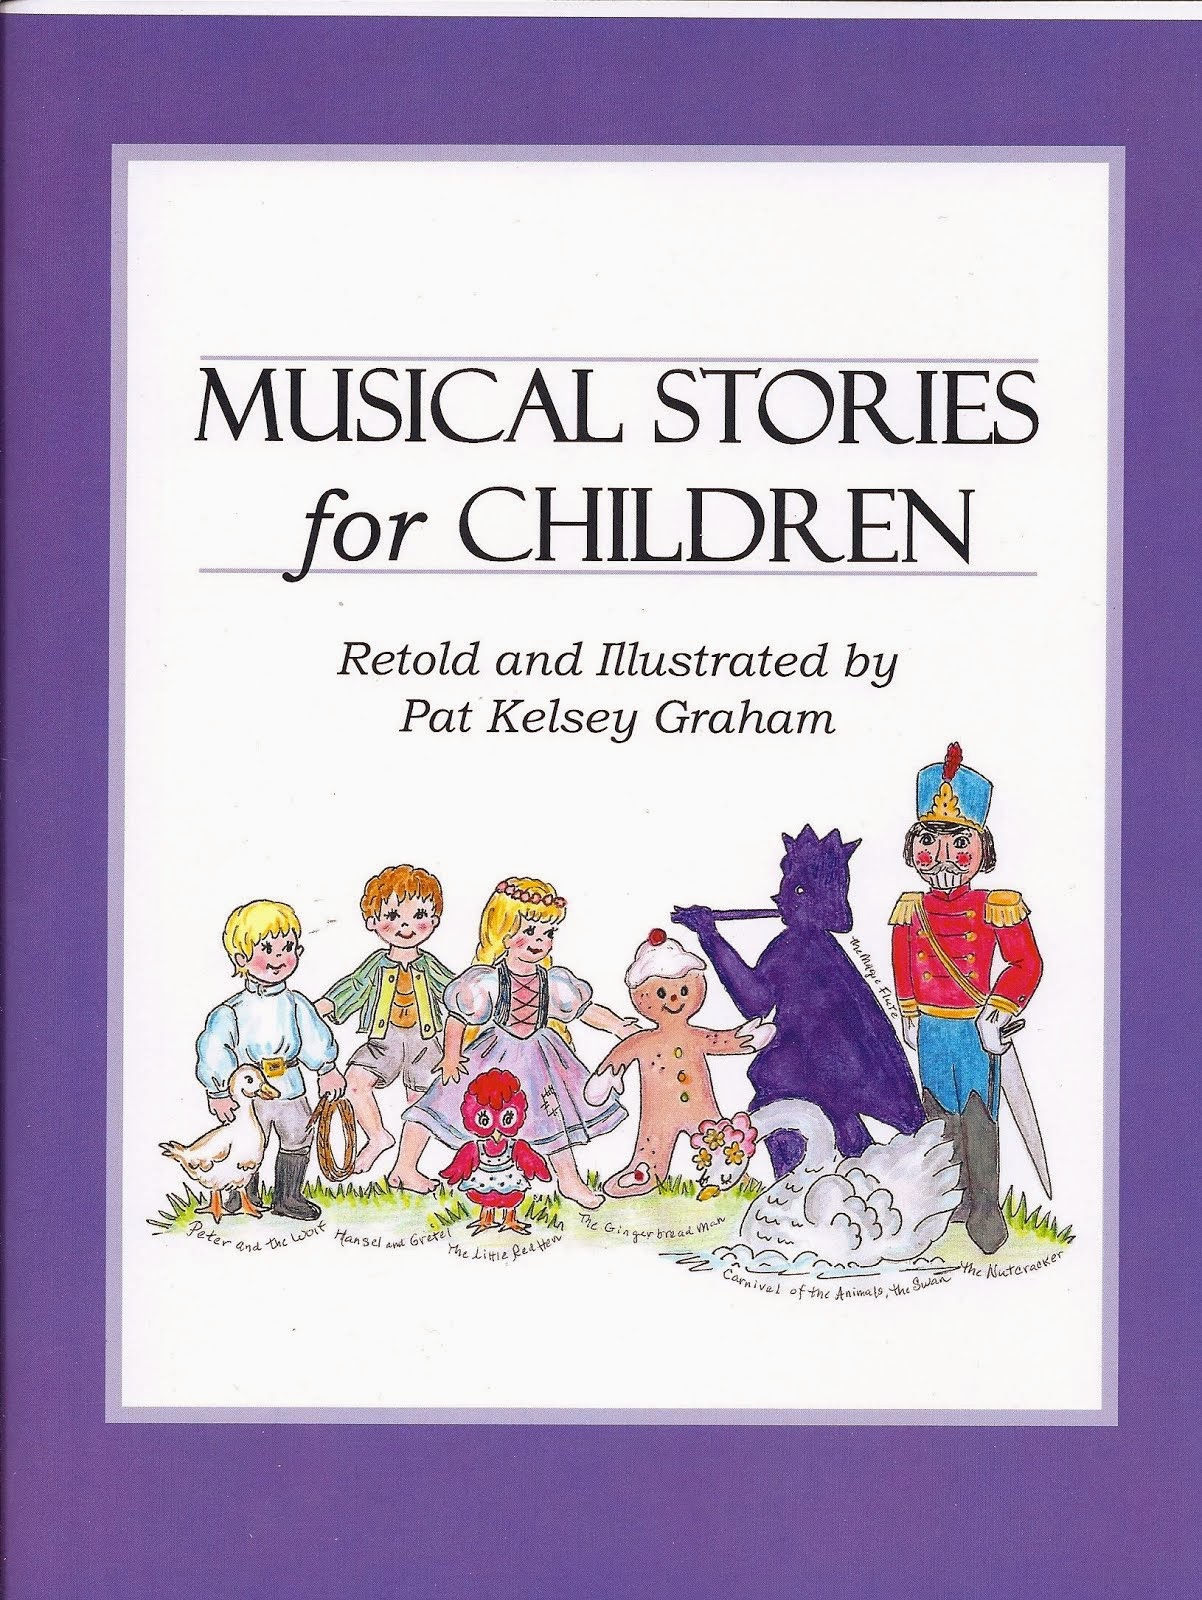 MUSICAL STORIES FOR CHILDREN